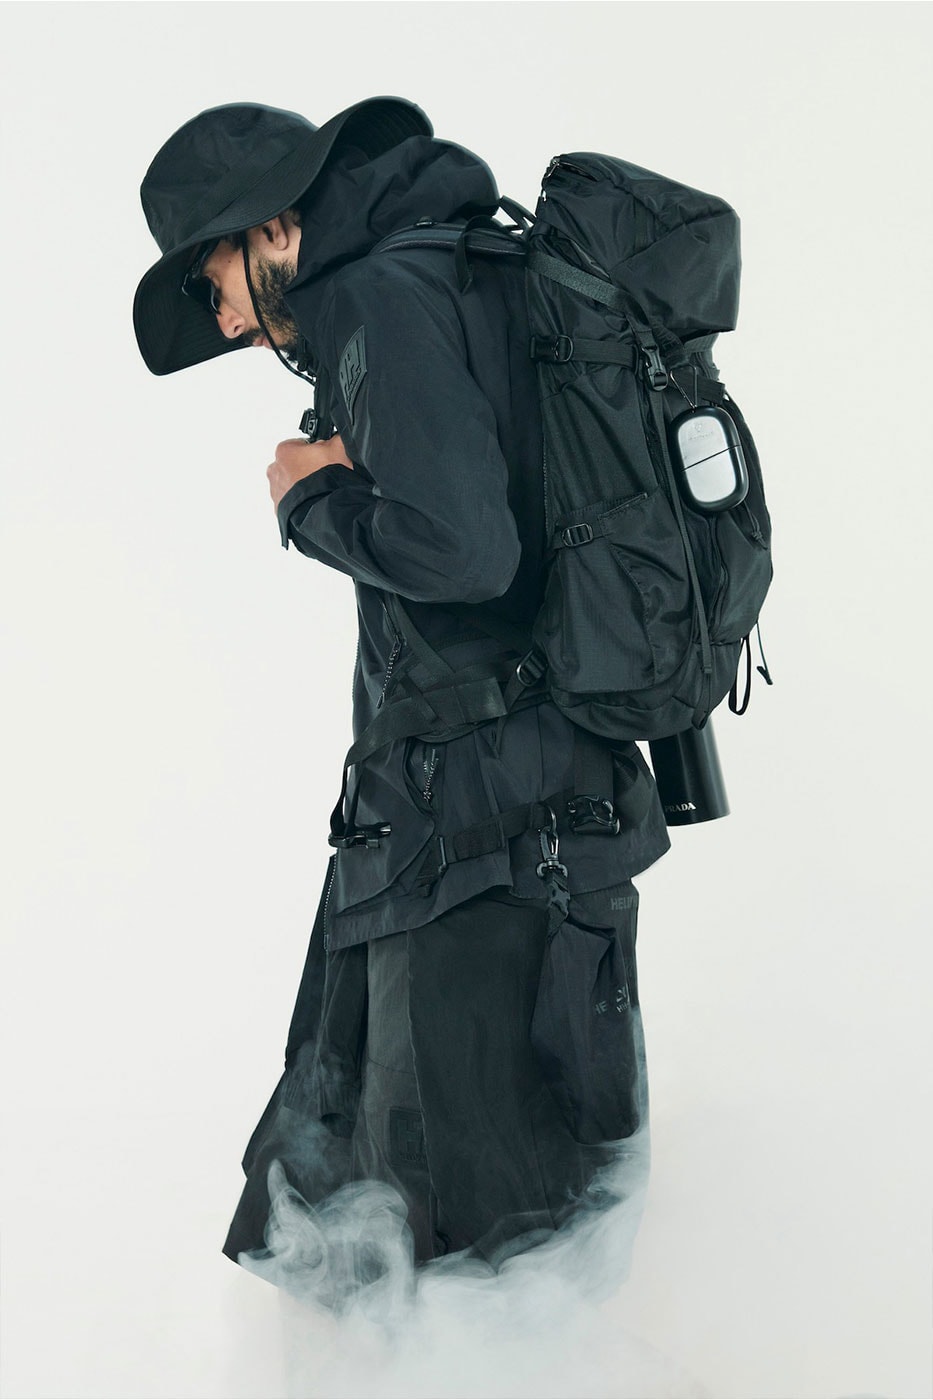 Helly Hansen HH-118389225 SS22 Collection Release Info Aegir Windbreakers Vests Rainhats Waterproof Bags Modular Pouch Bags